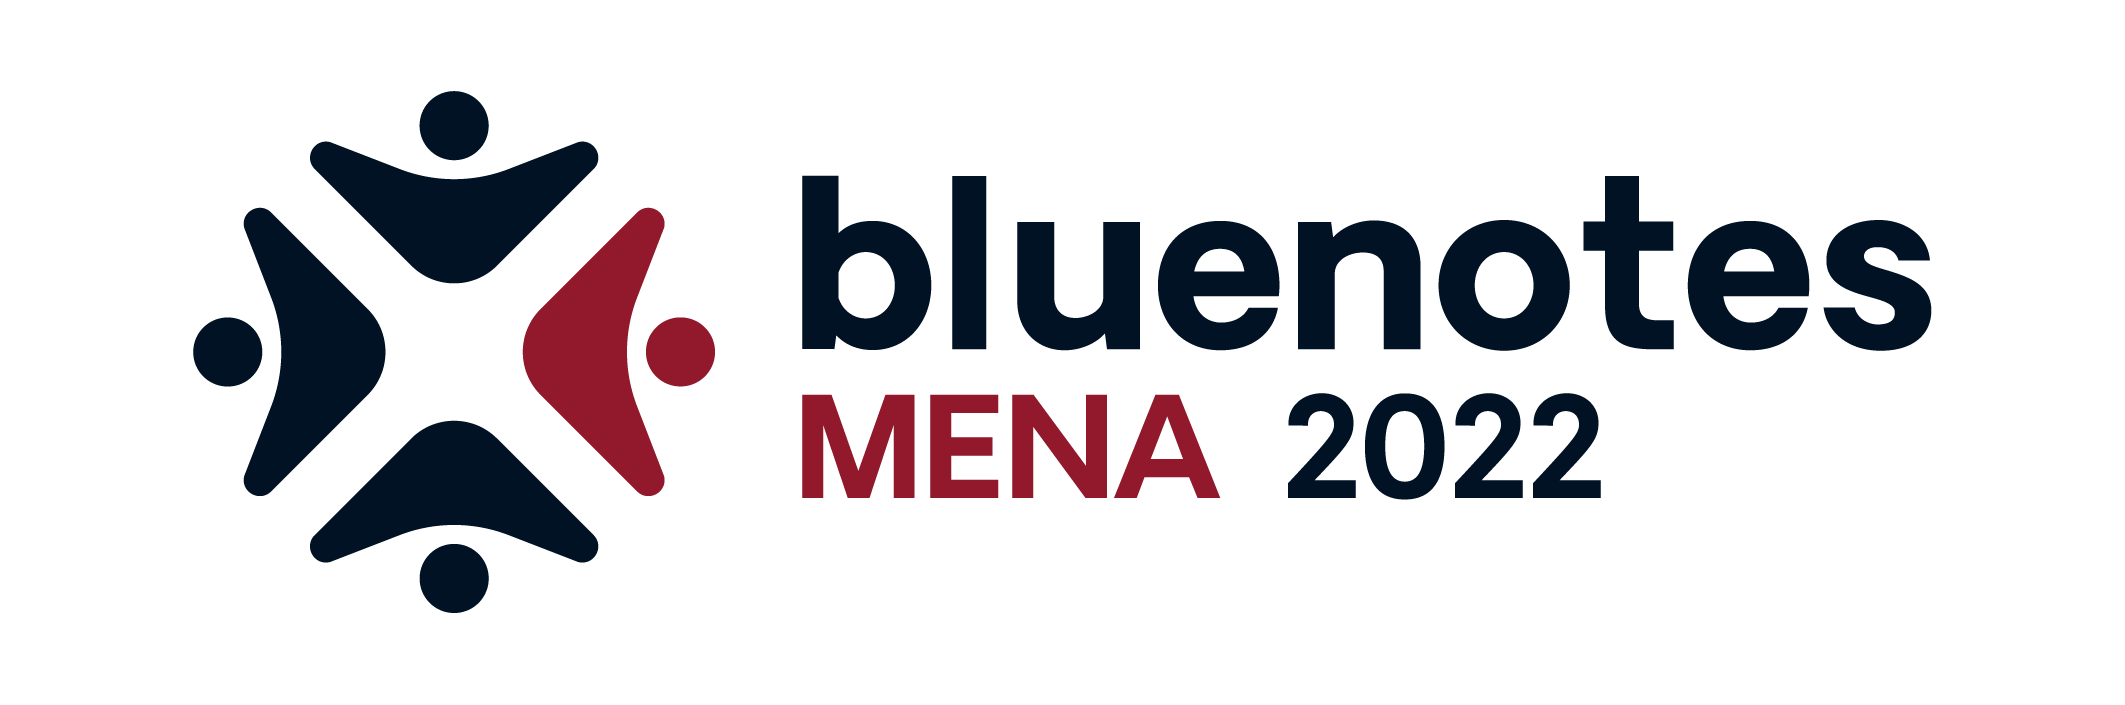 Bluenotes MENA 2022